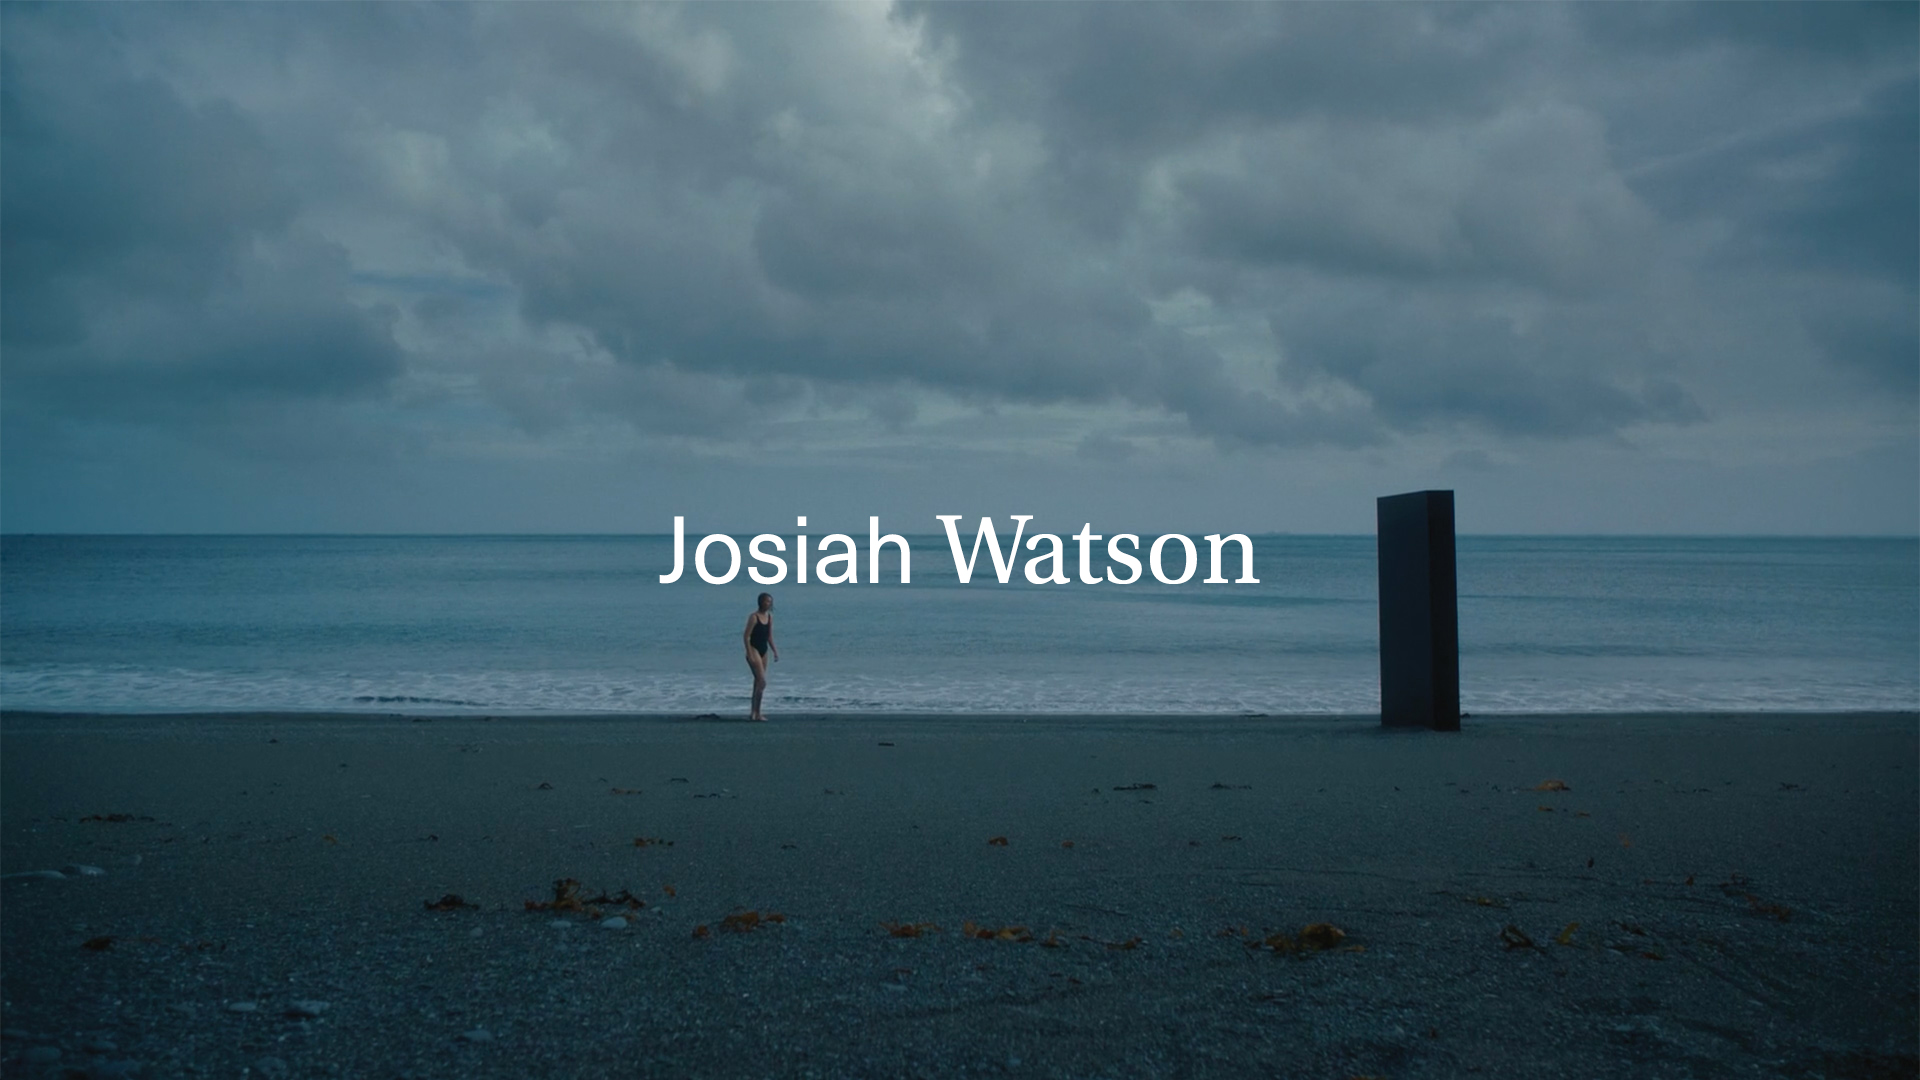 Josiah Watson